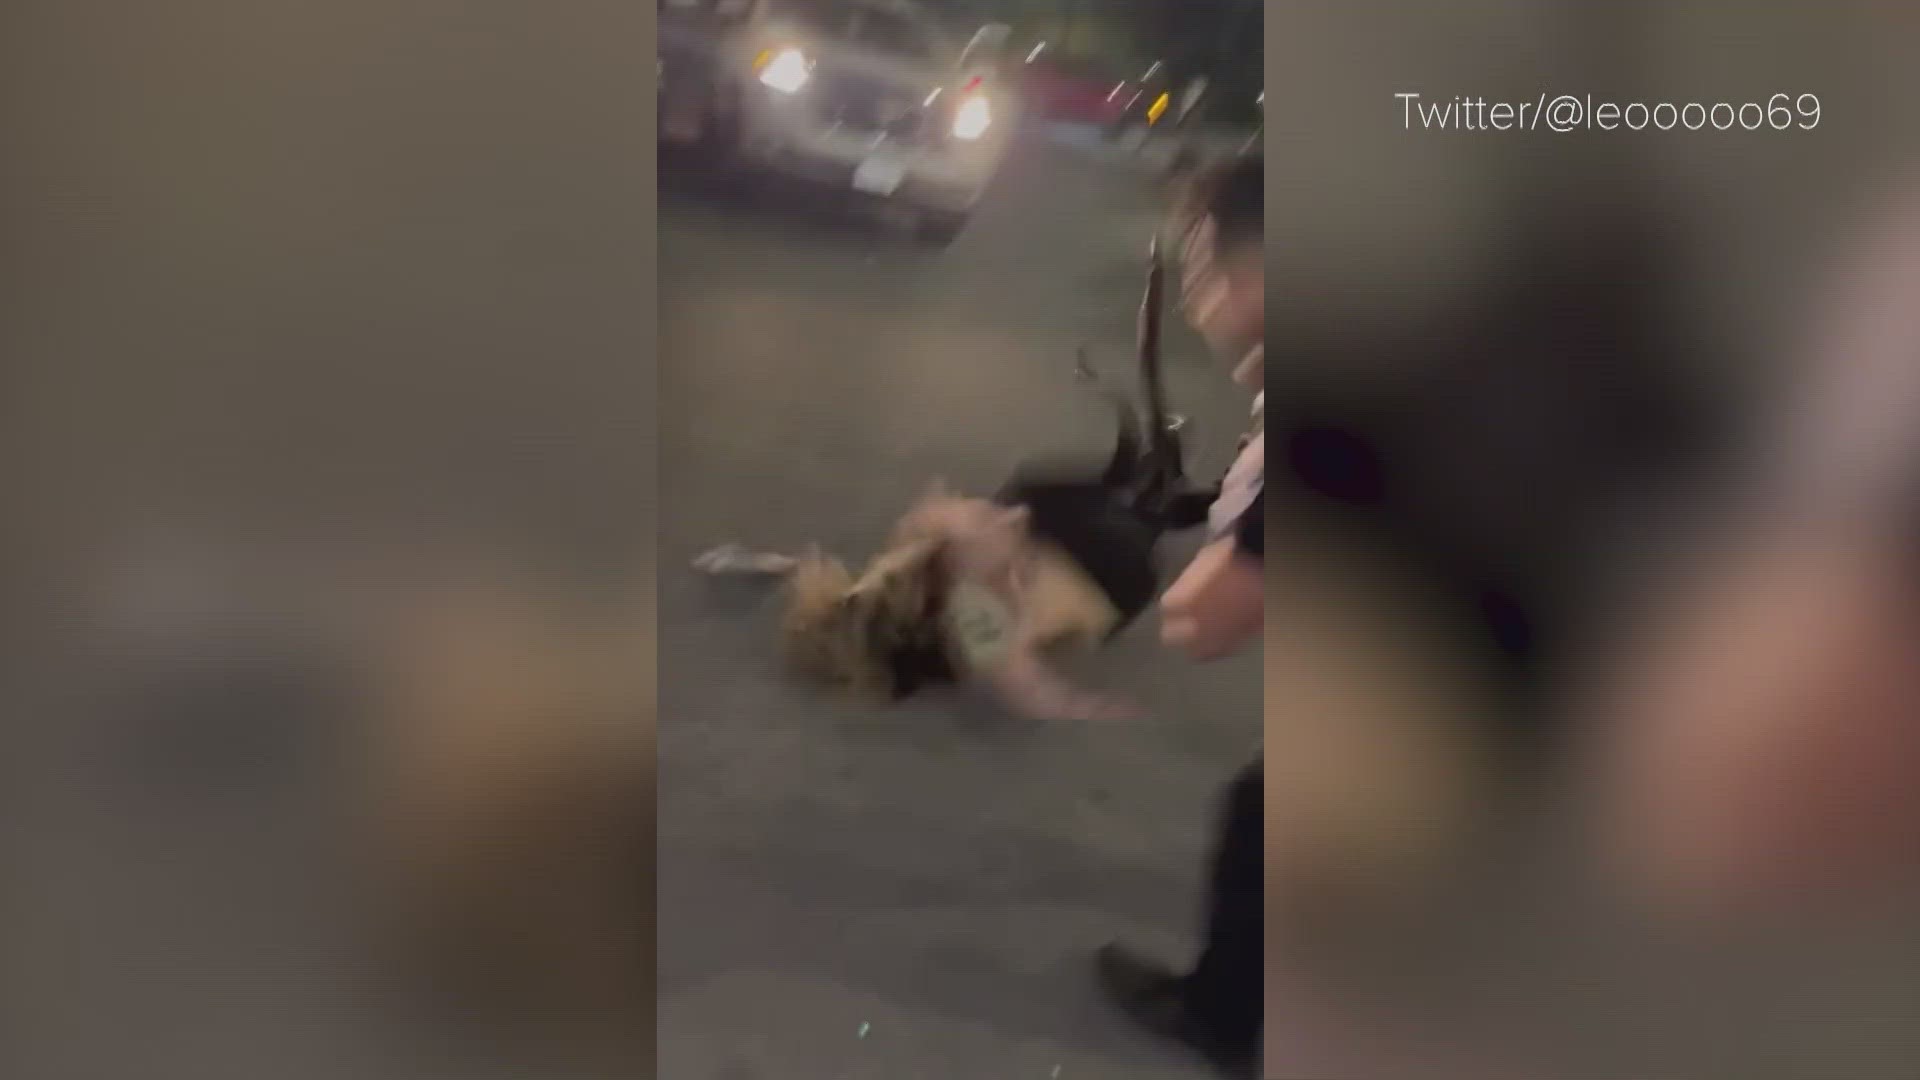 San Antonio brawl Video shows security slamming woman to ground kens5 pic pic